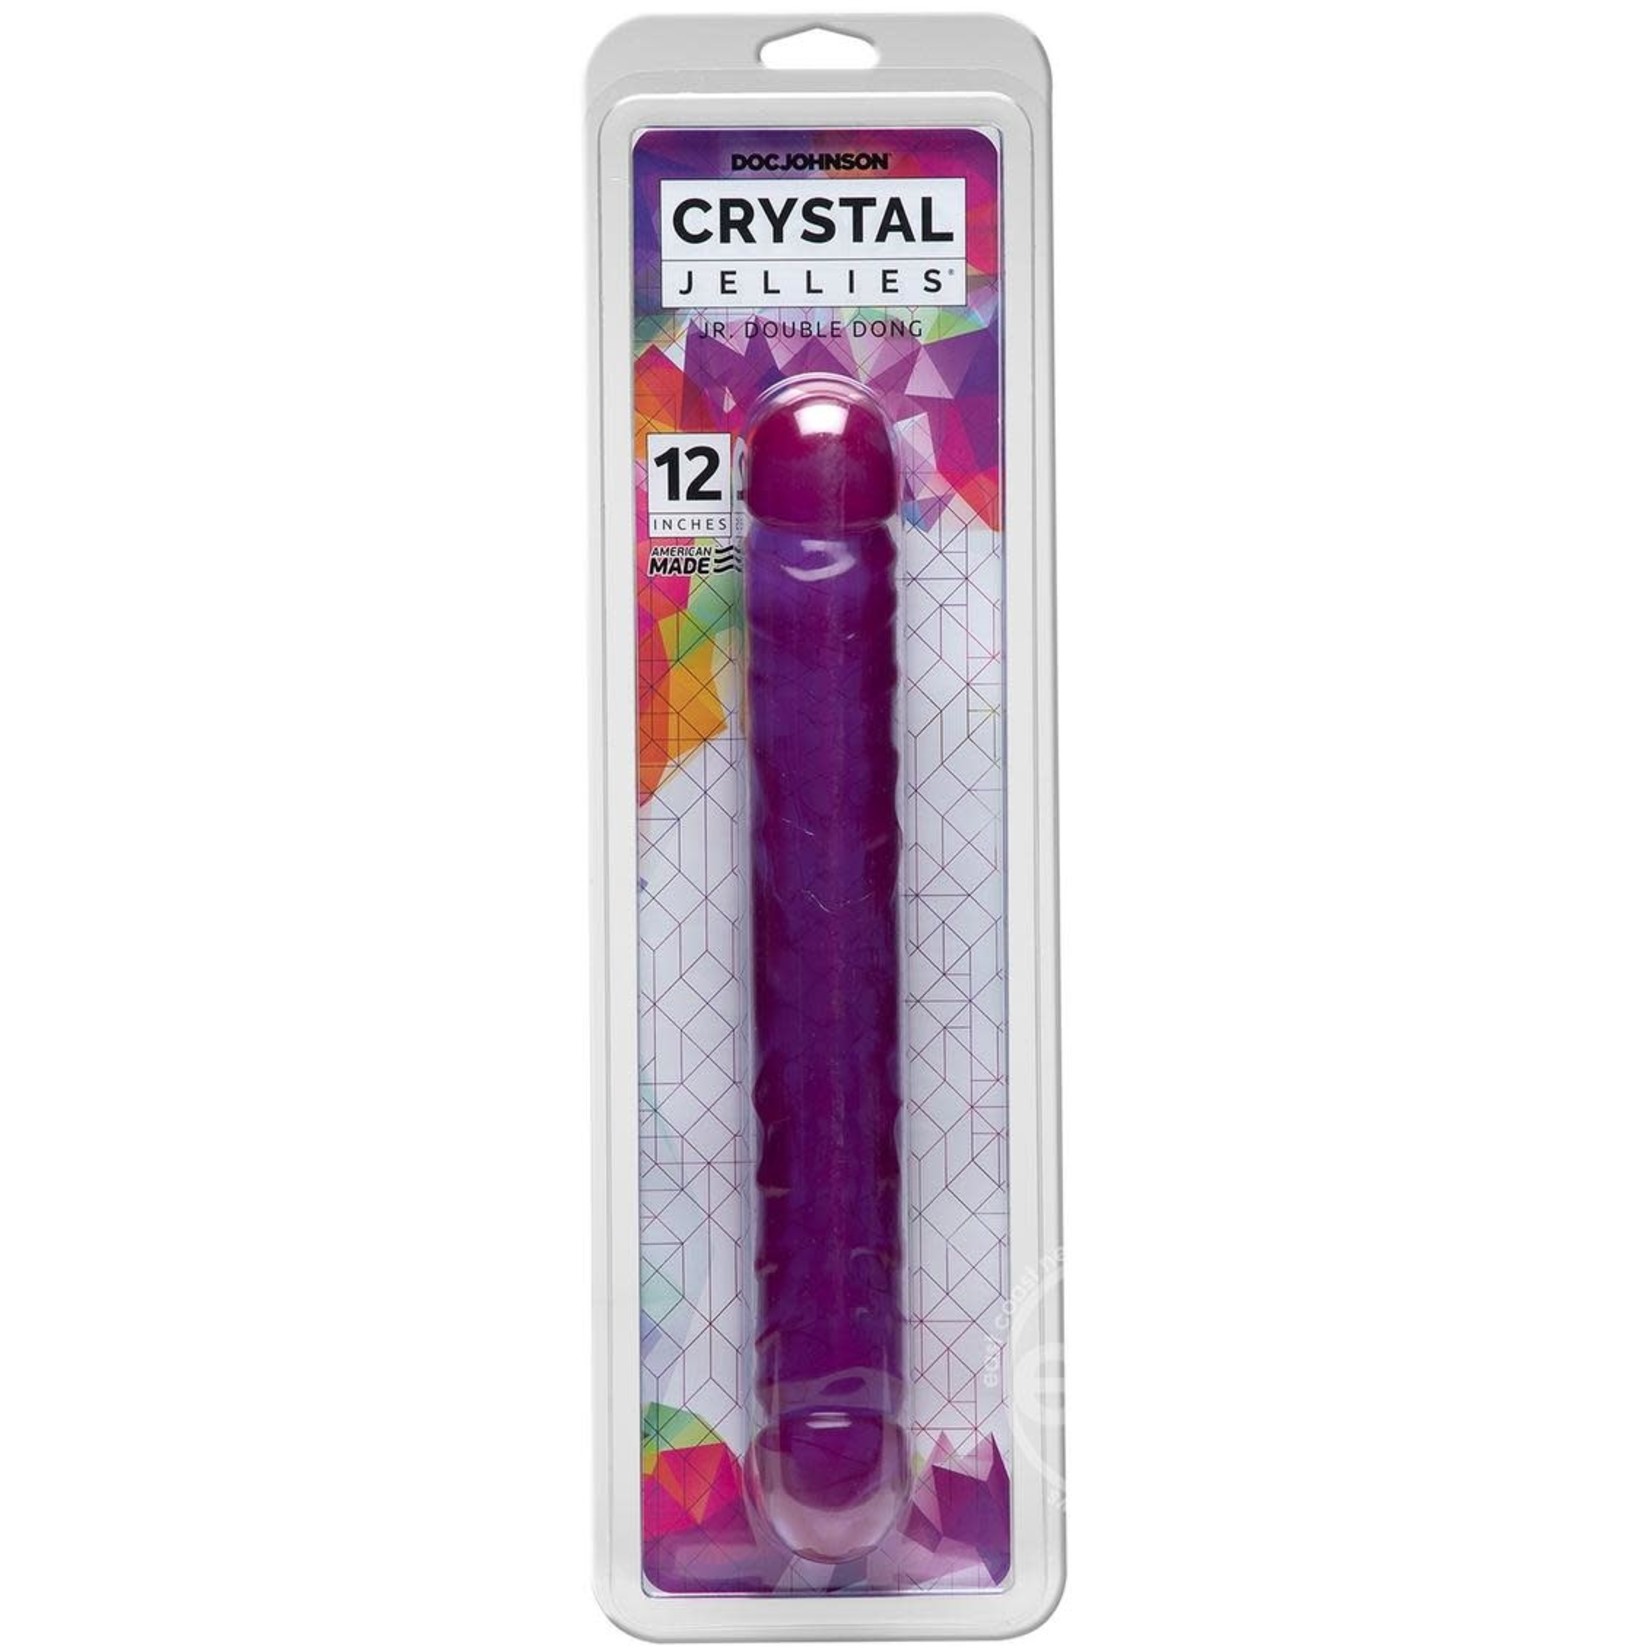 Crystal Jellies Jr. Double Dildo 12in - Purple